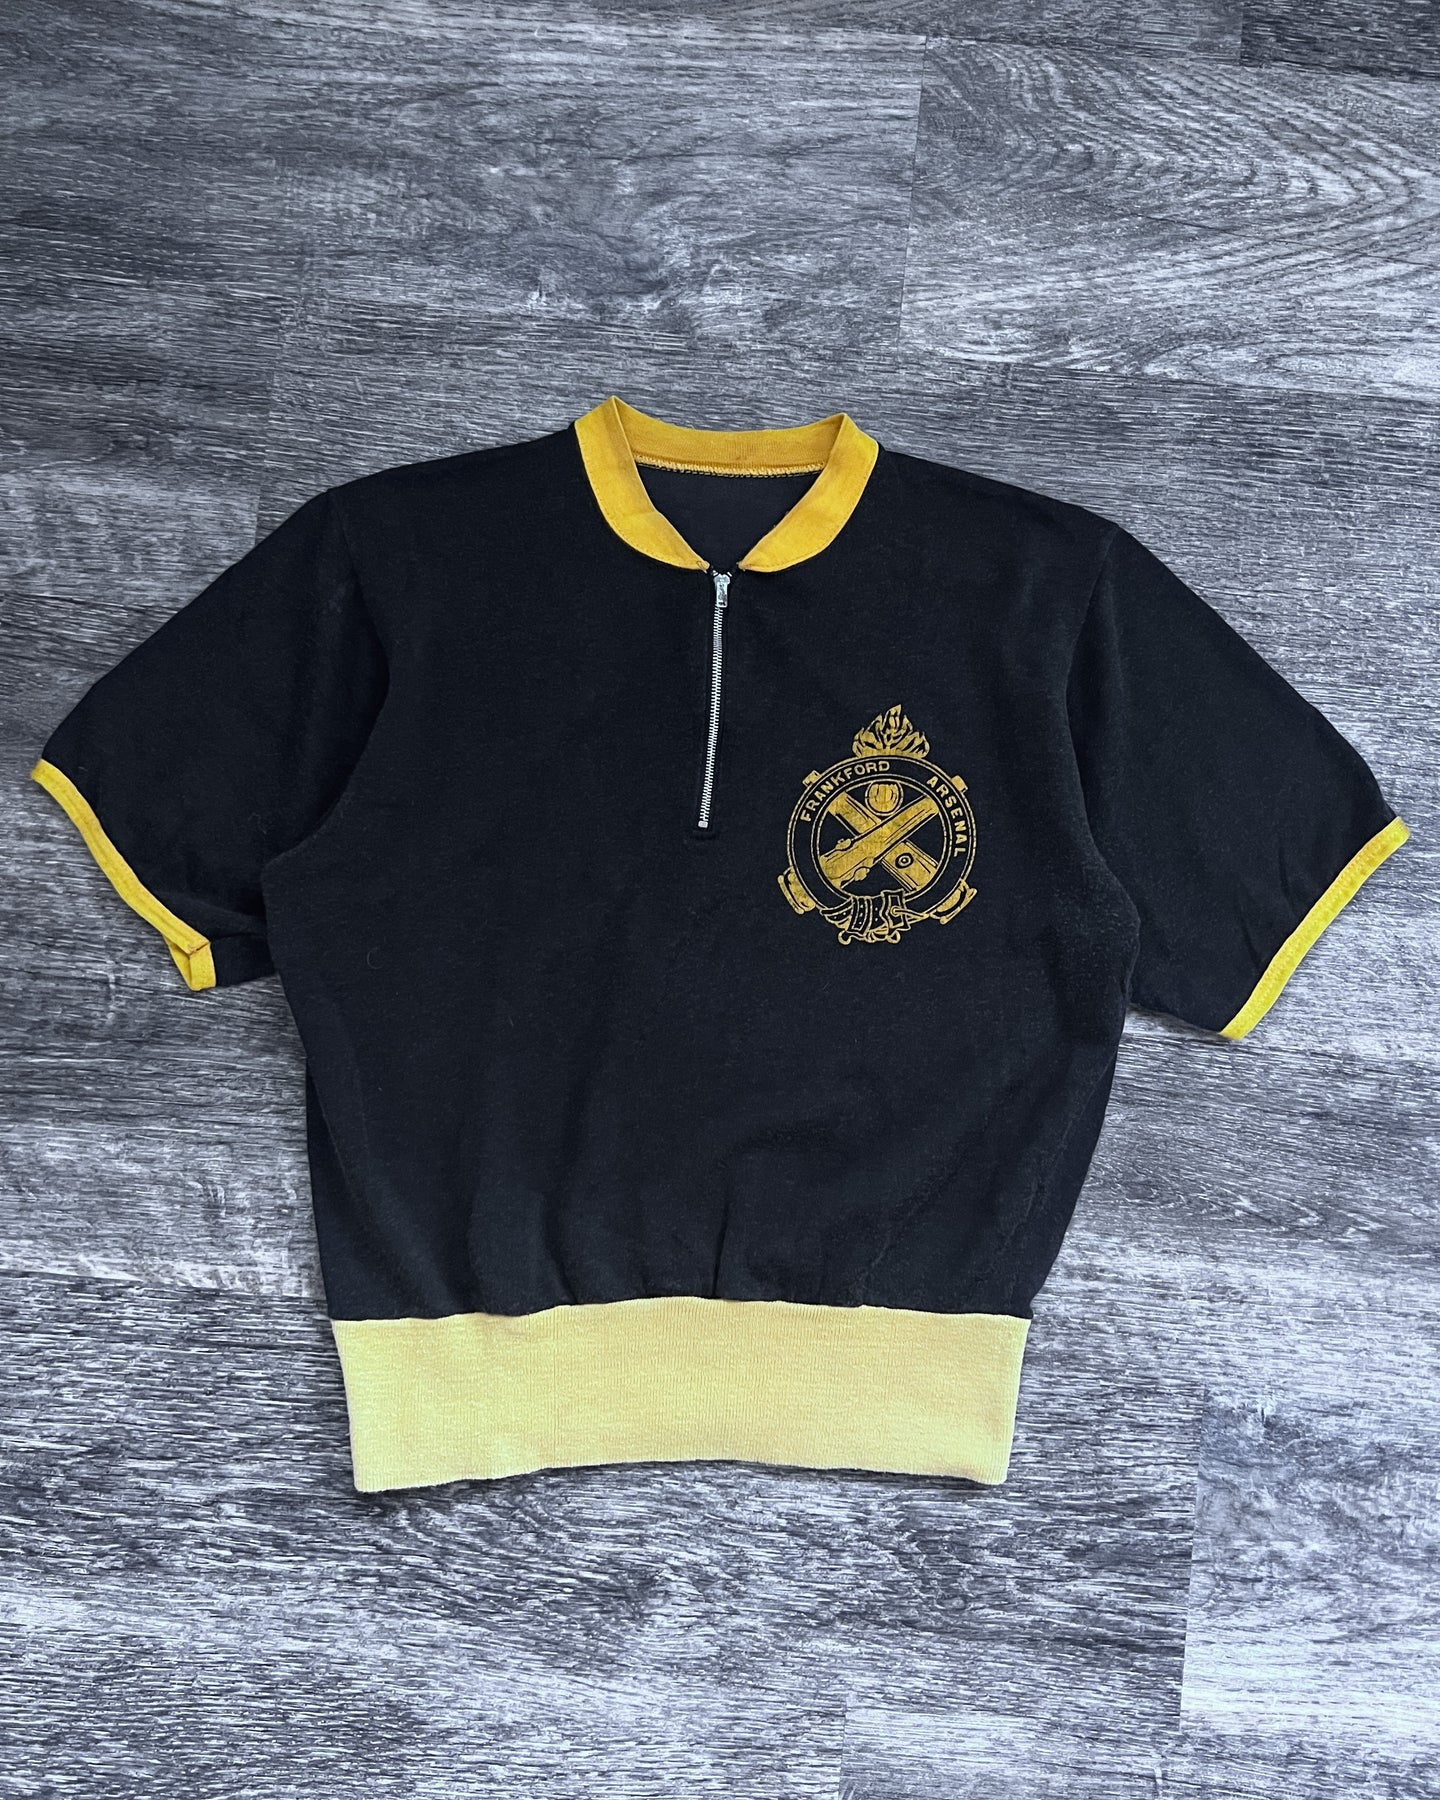 1970s Quarter Zip Frankford Shirt - Size Medium